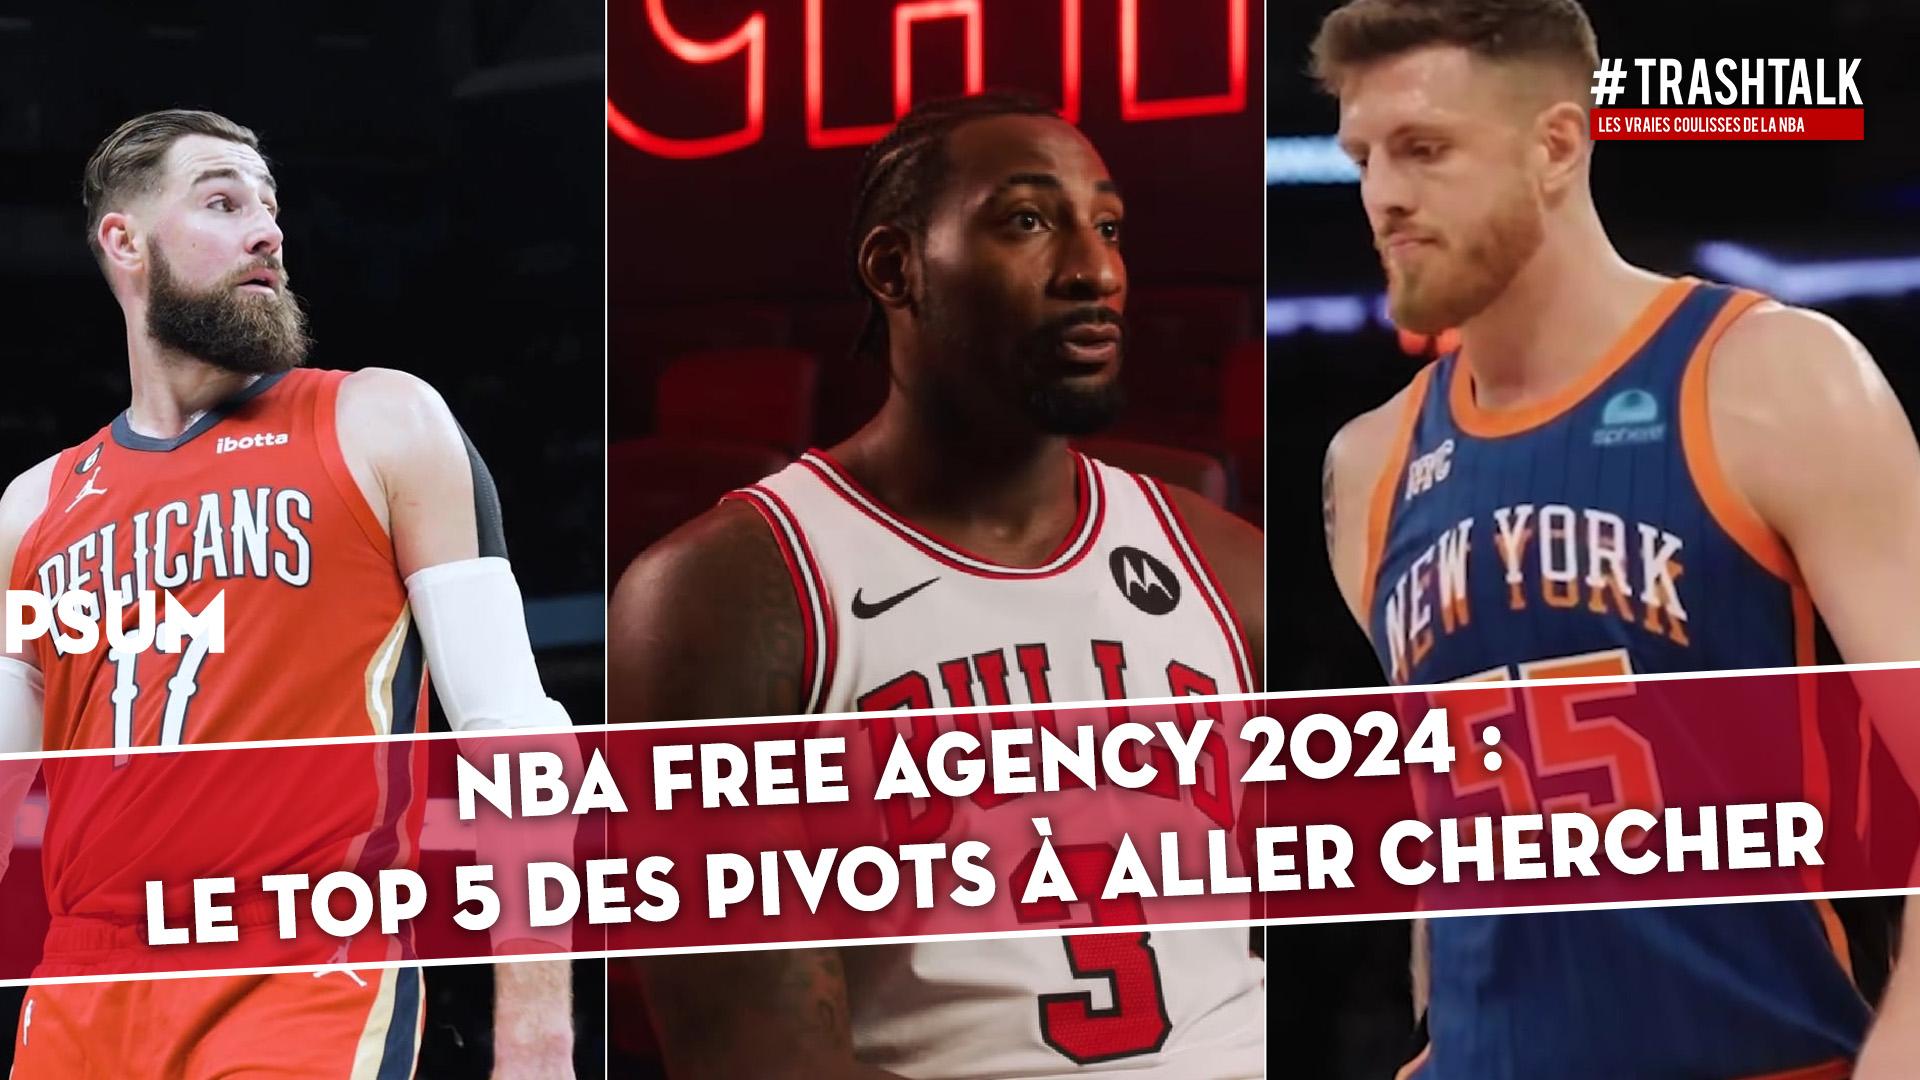 NBA Free Agency 2024 Top 5 pivots disponibles 24 juin 2024